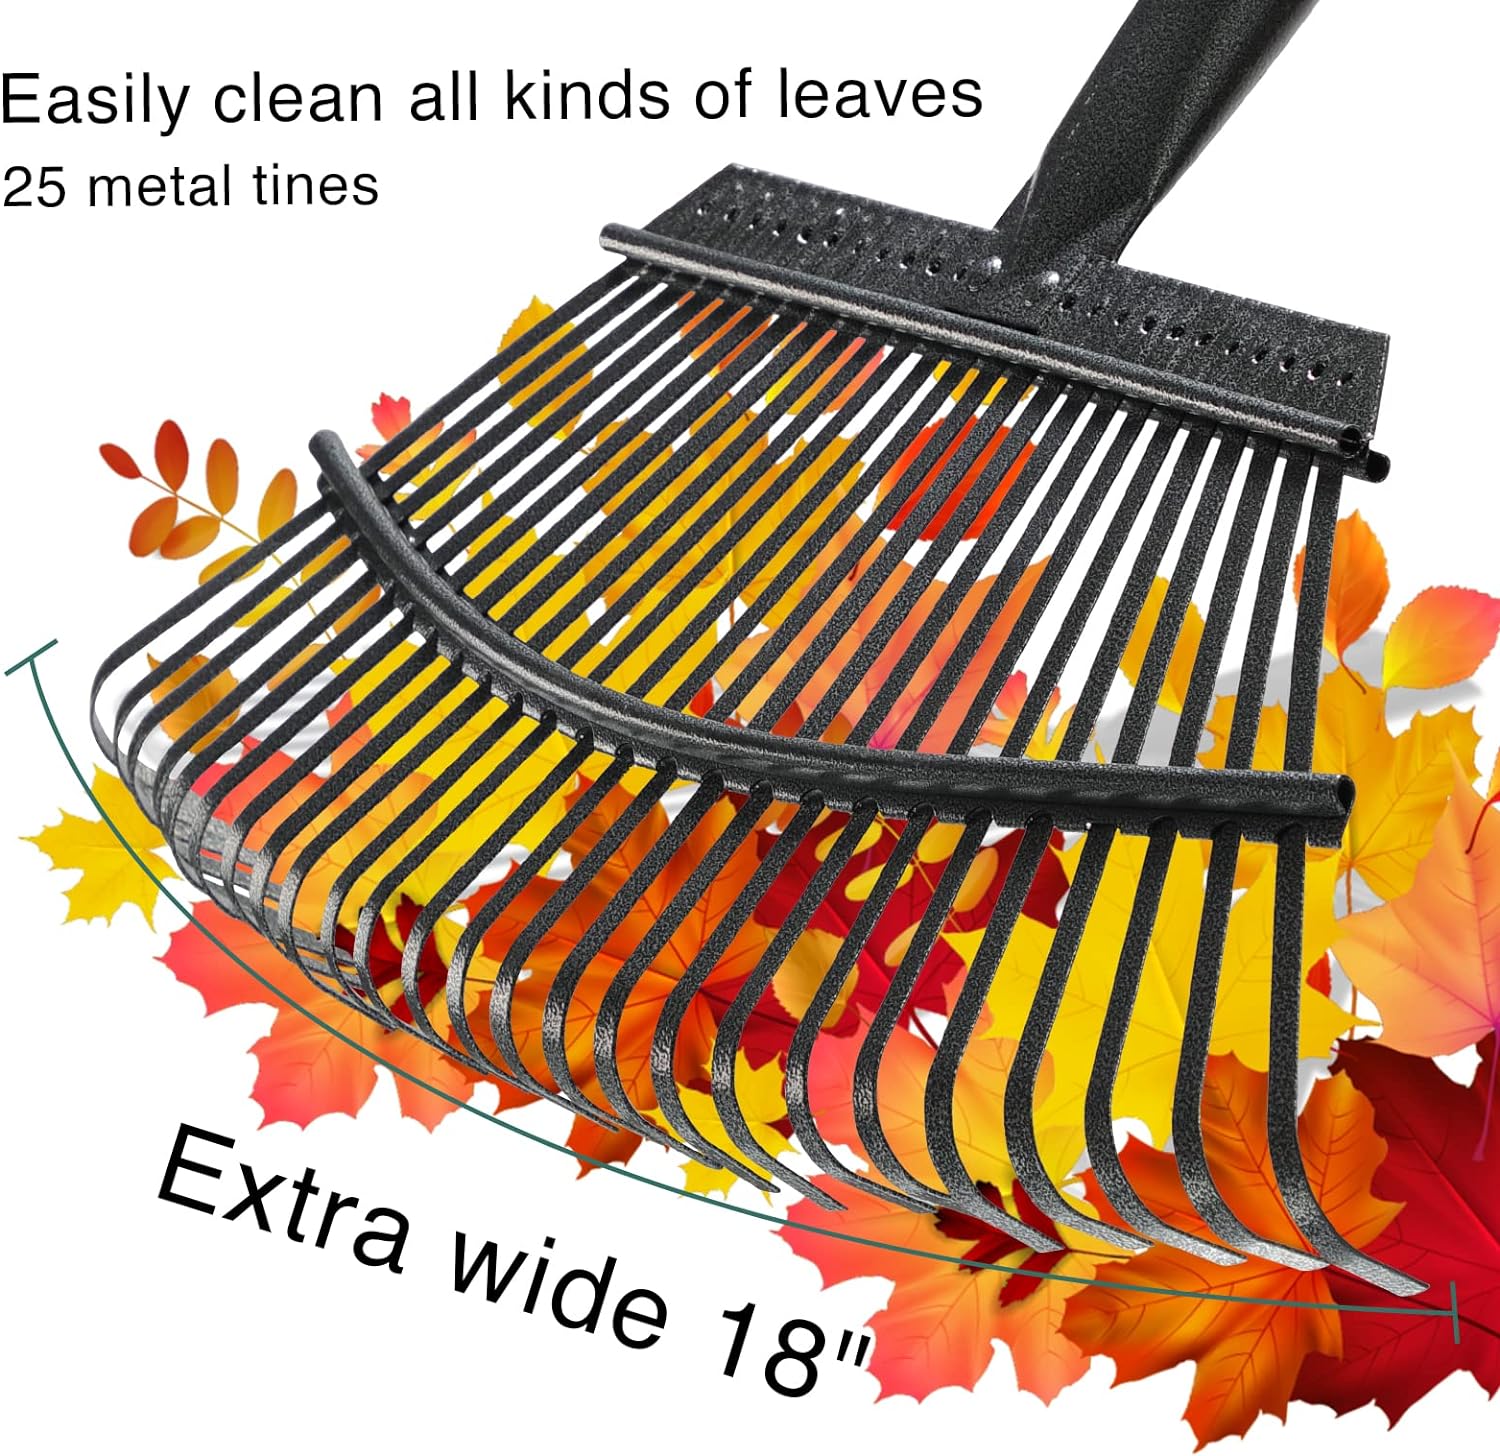 DonSail Leaf Rake for Leaves, 18" Wide Heavy Duty Metal Garden Rake 25 Tines, Adjustable Lawn Yard Shrub Kids Rake 36-50"